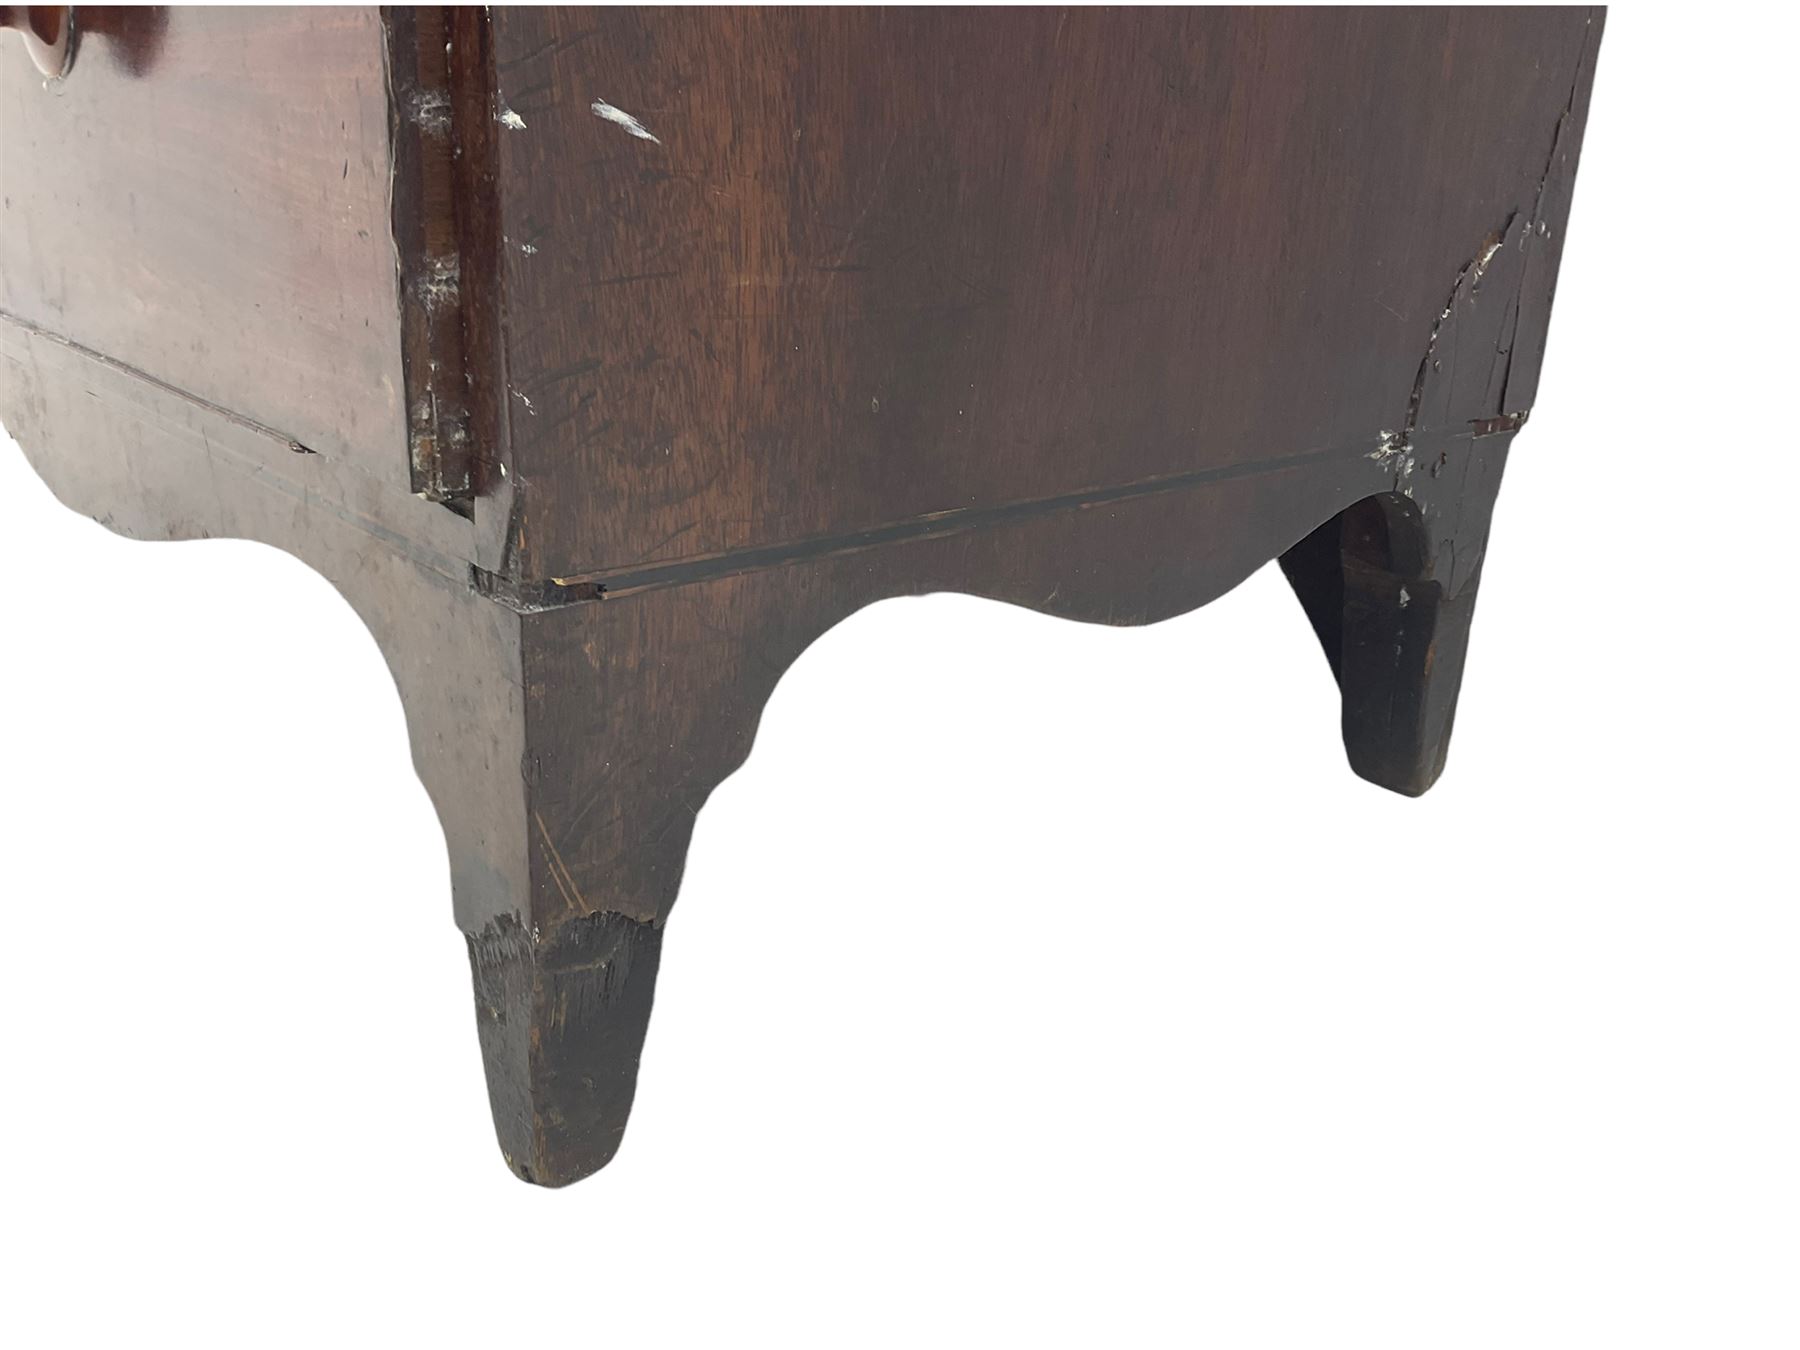 19th century mahogany chest - Image 5 of 8